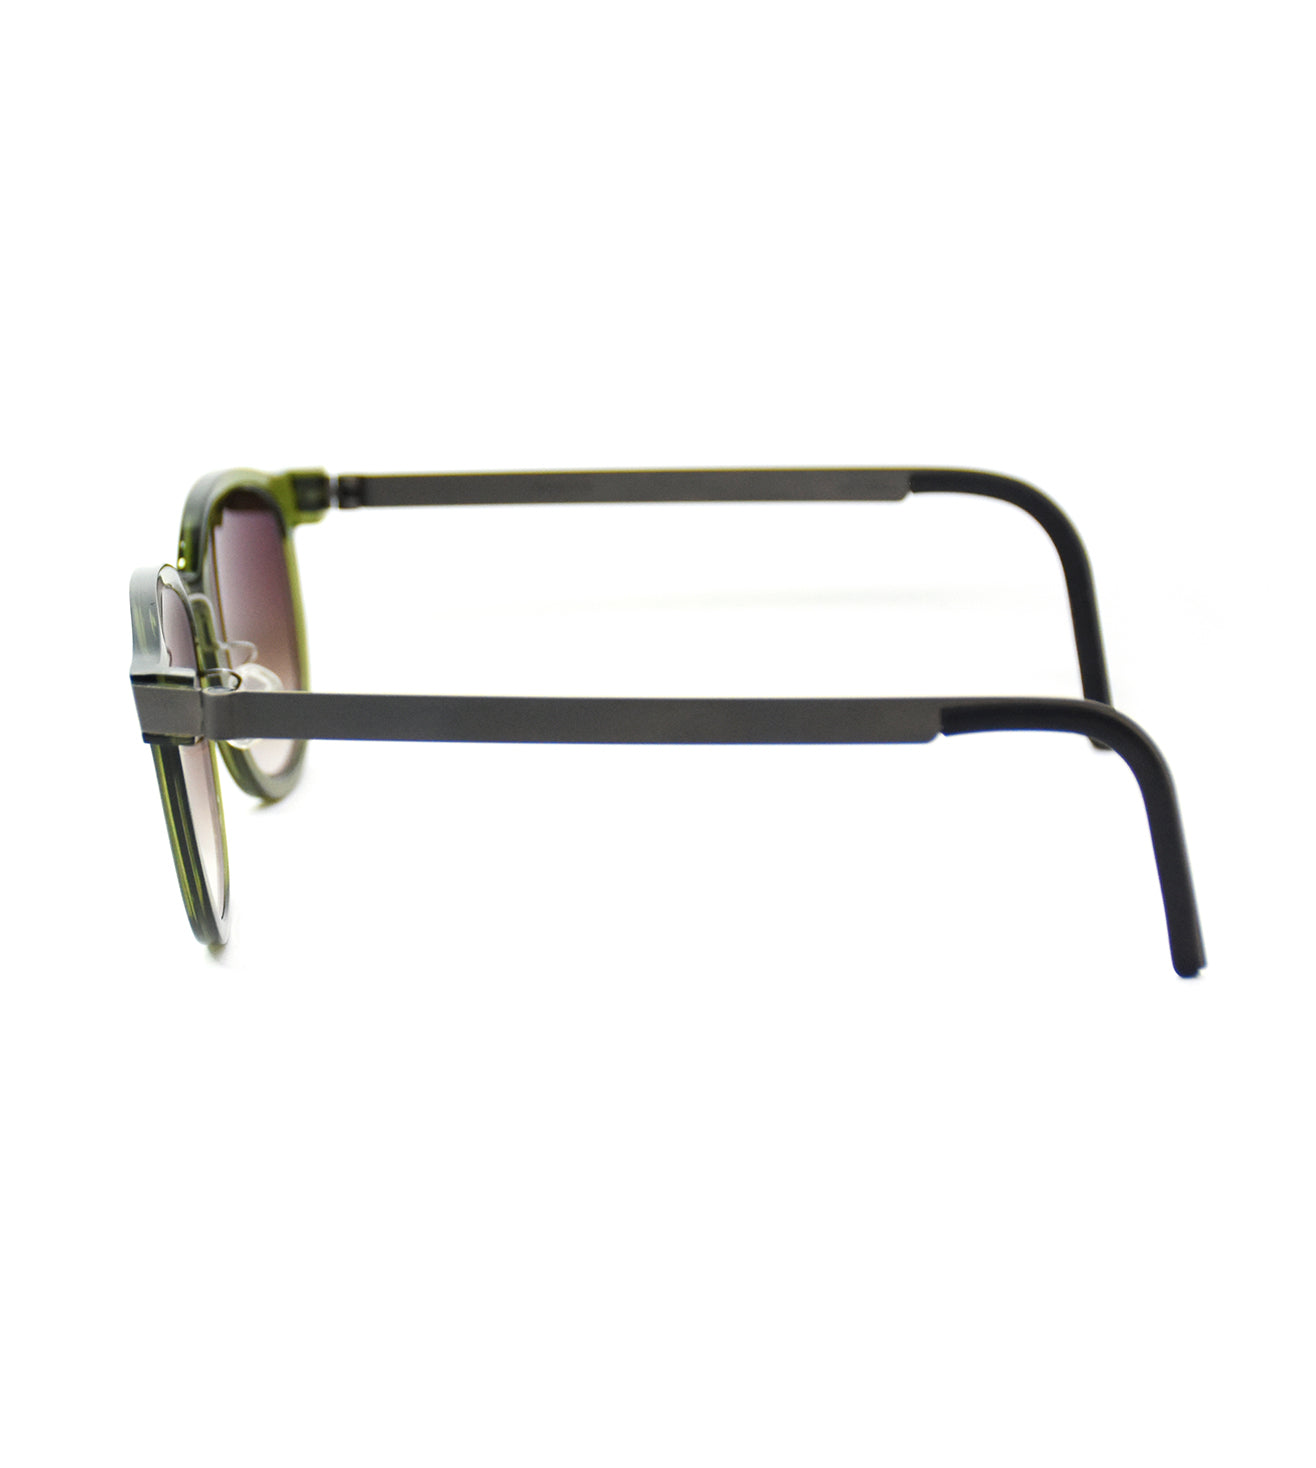 Lindberg Unisex Grey Round Sunglasses